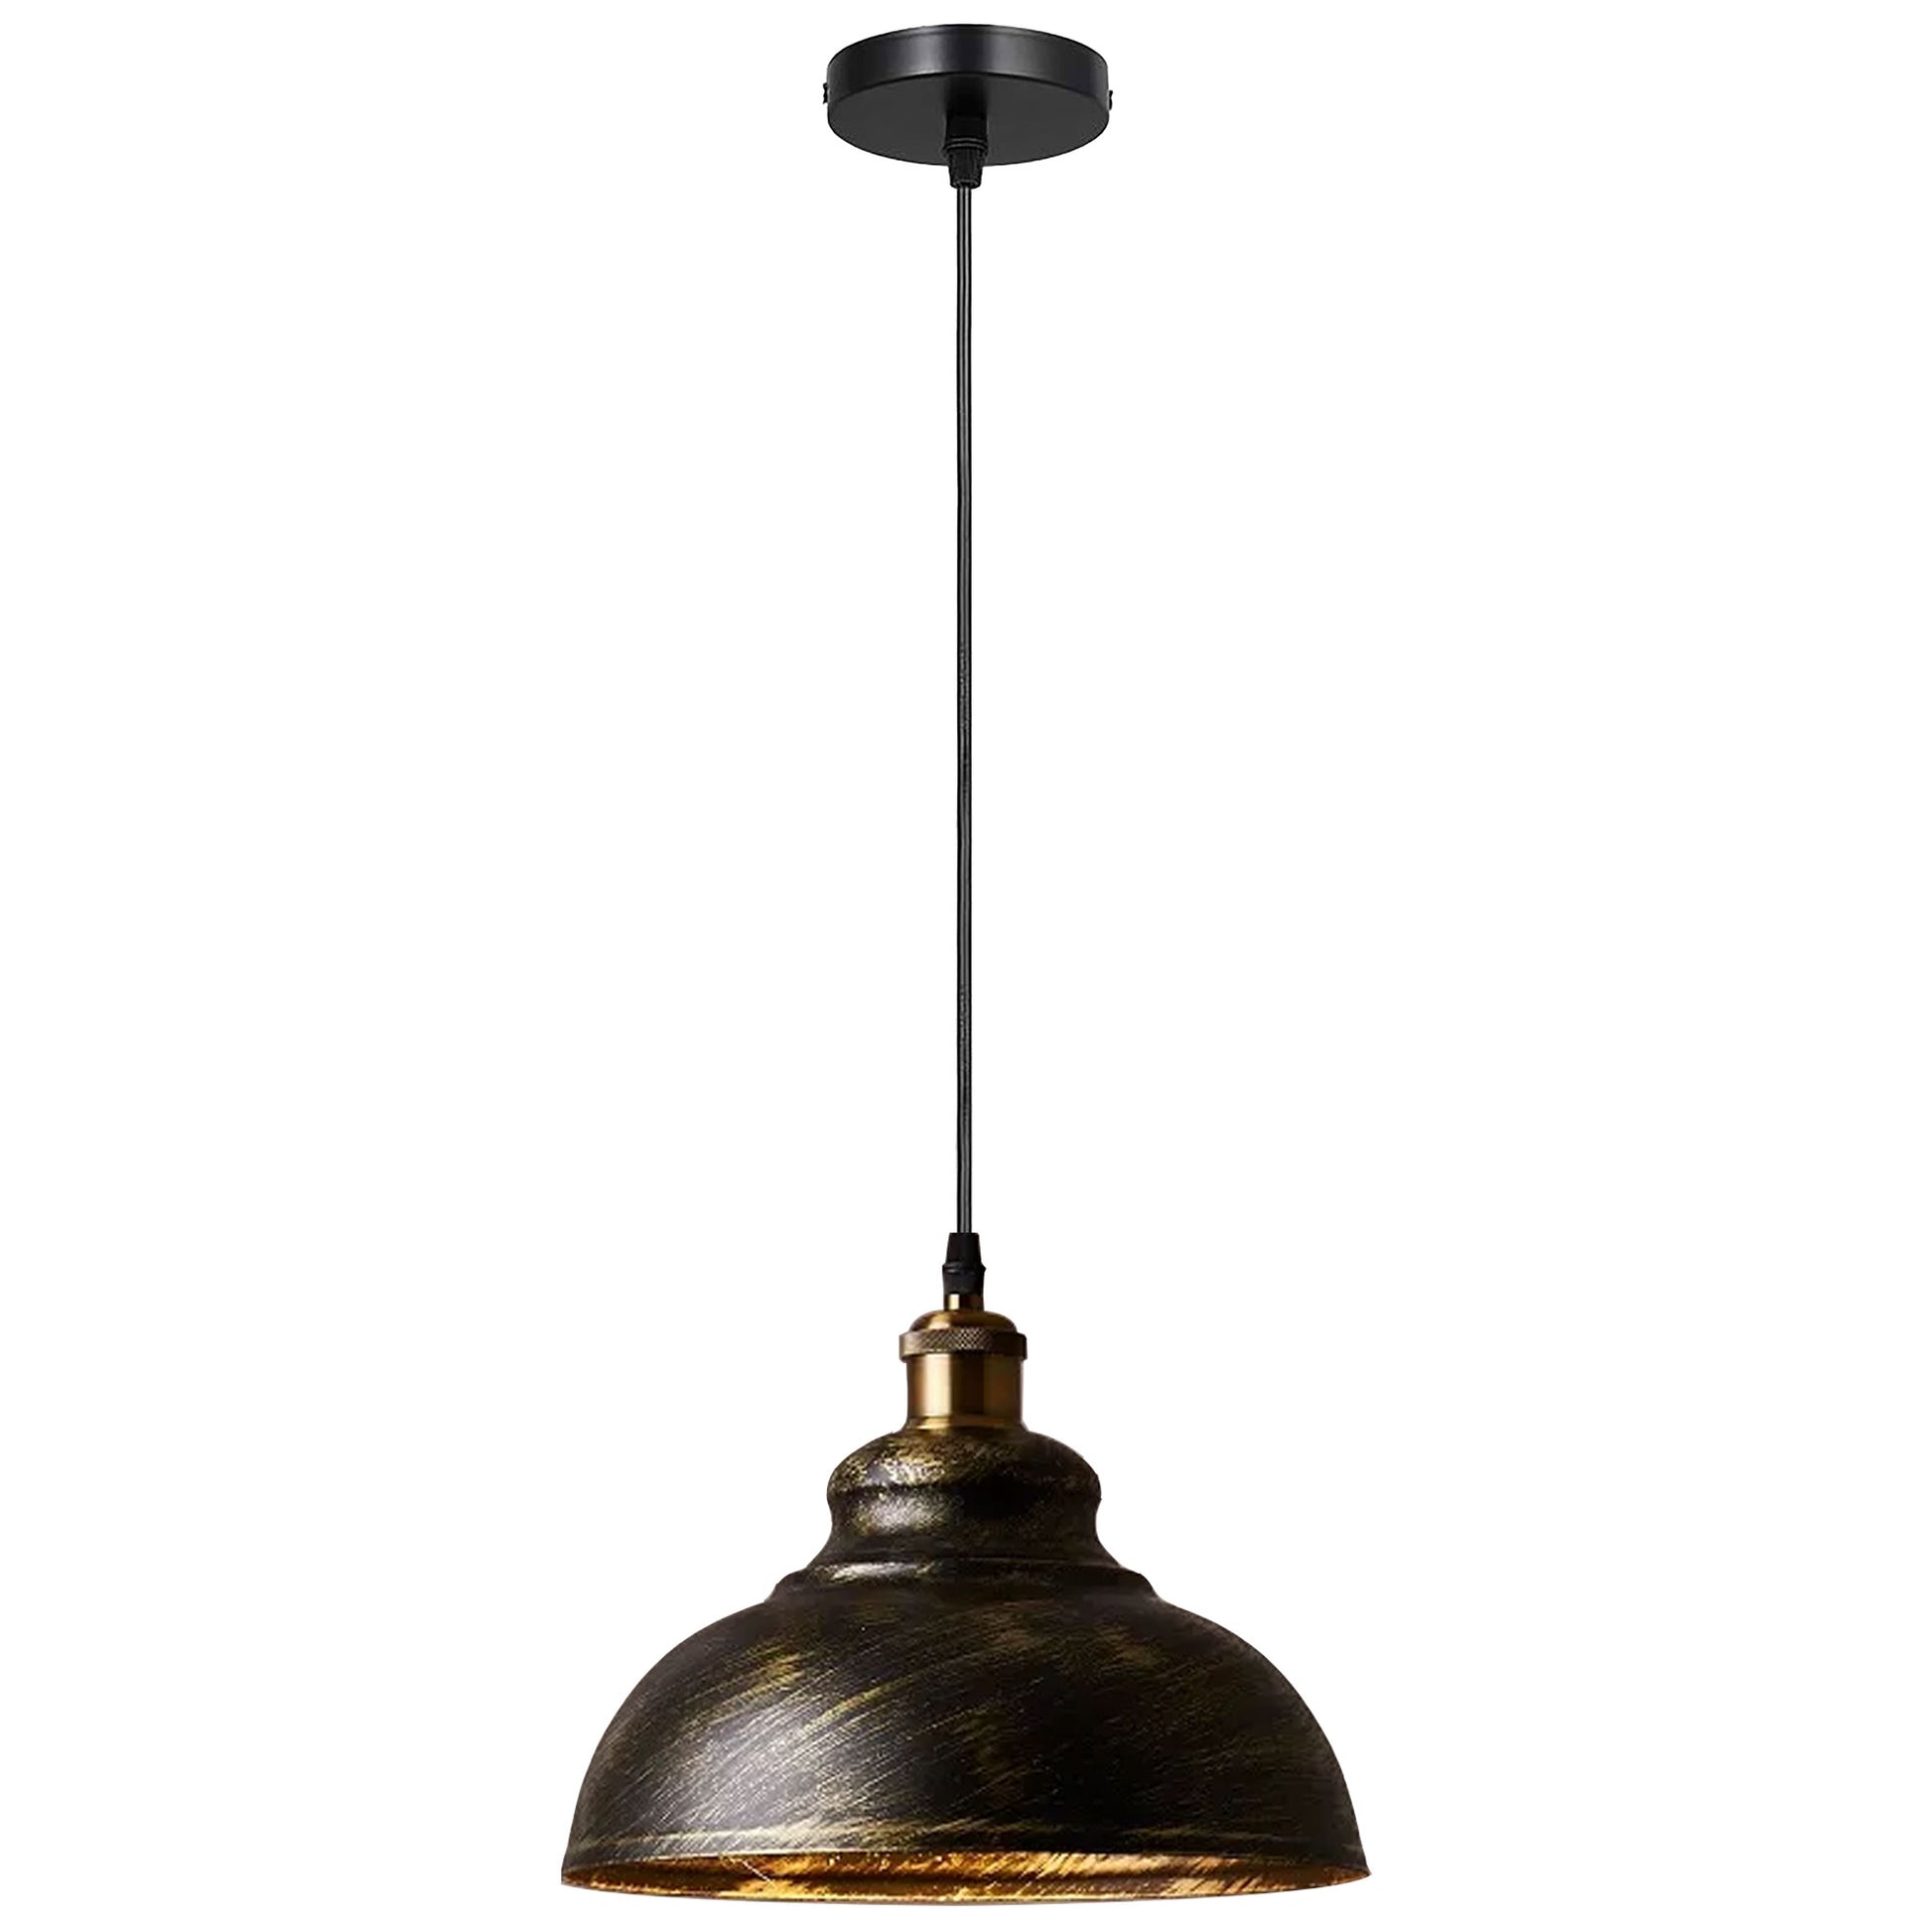 Brushed Brass ceiling pendant light